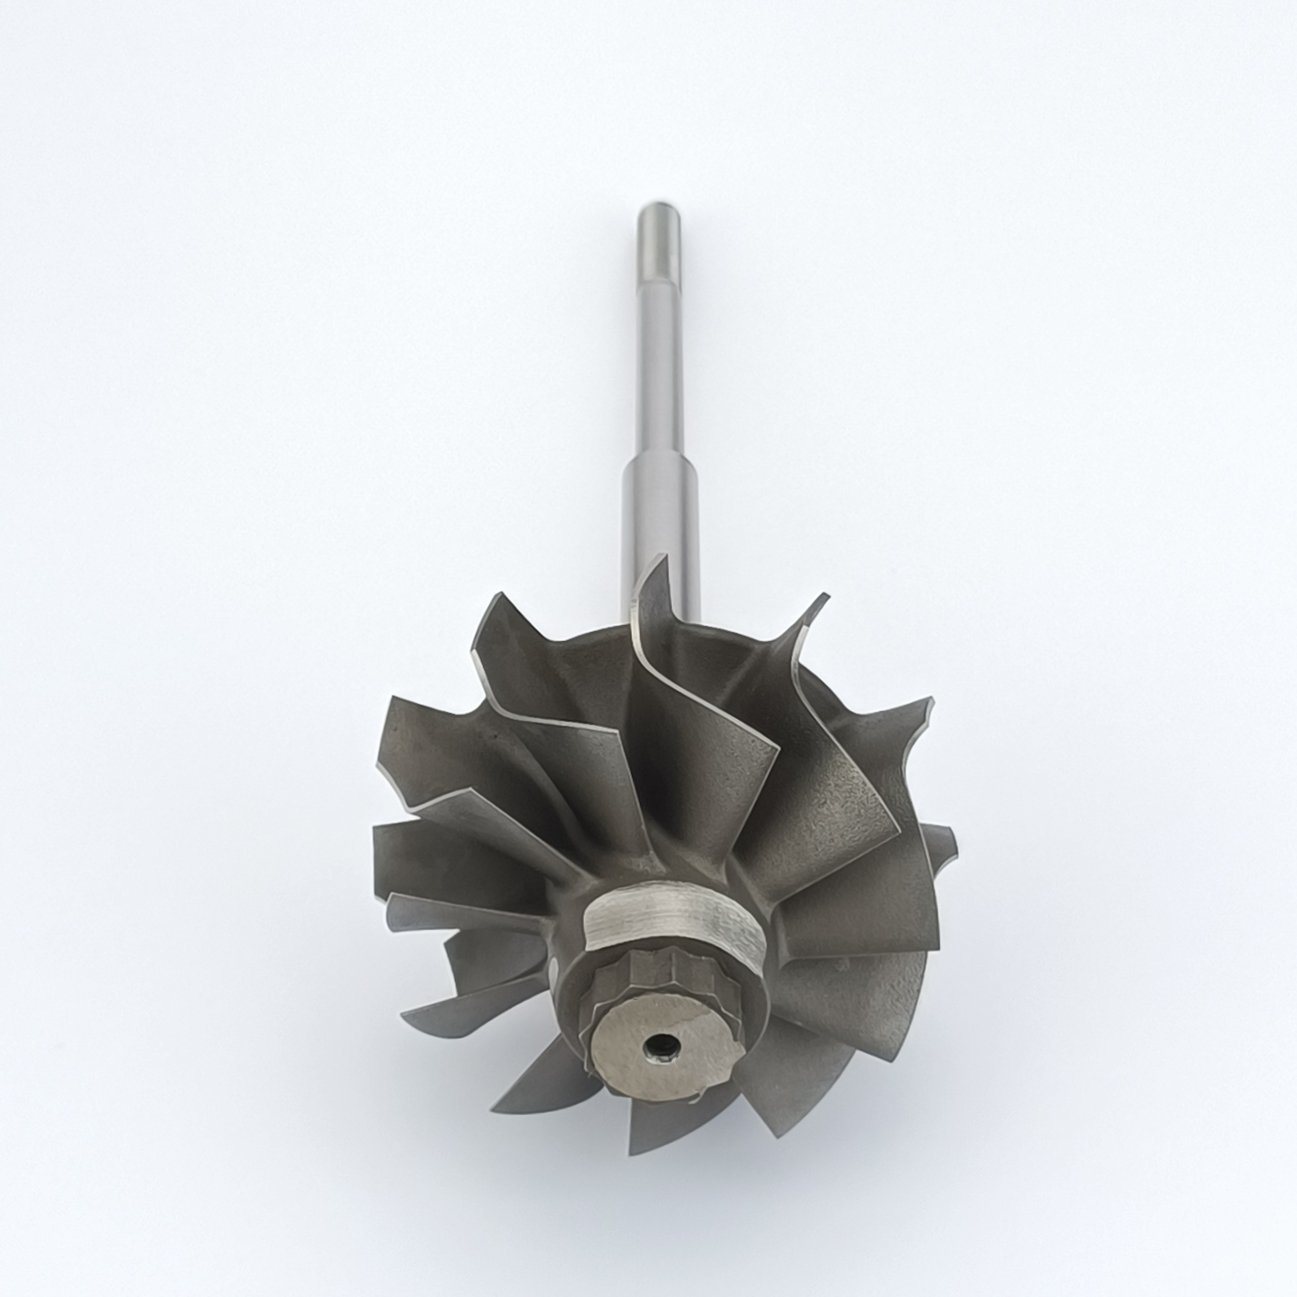 Turbo Turbine Wheel Shaft S200 Ind 70.1mm Exd 62.8mm Shaft Length 146mm